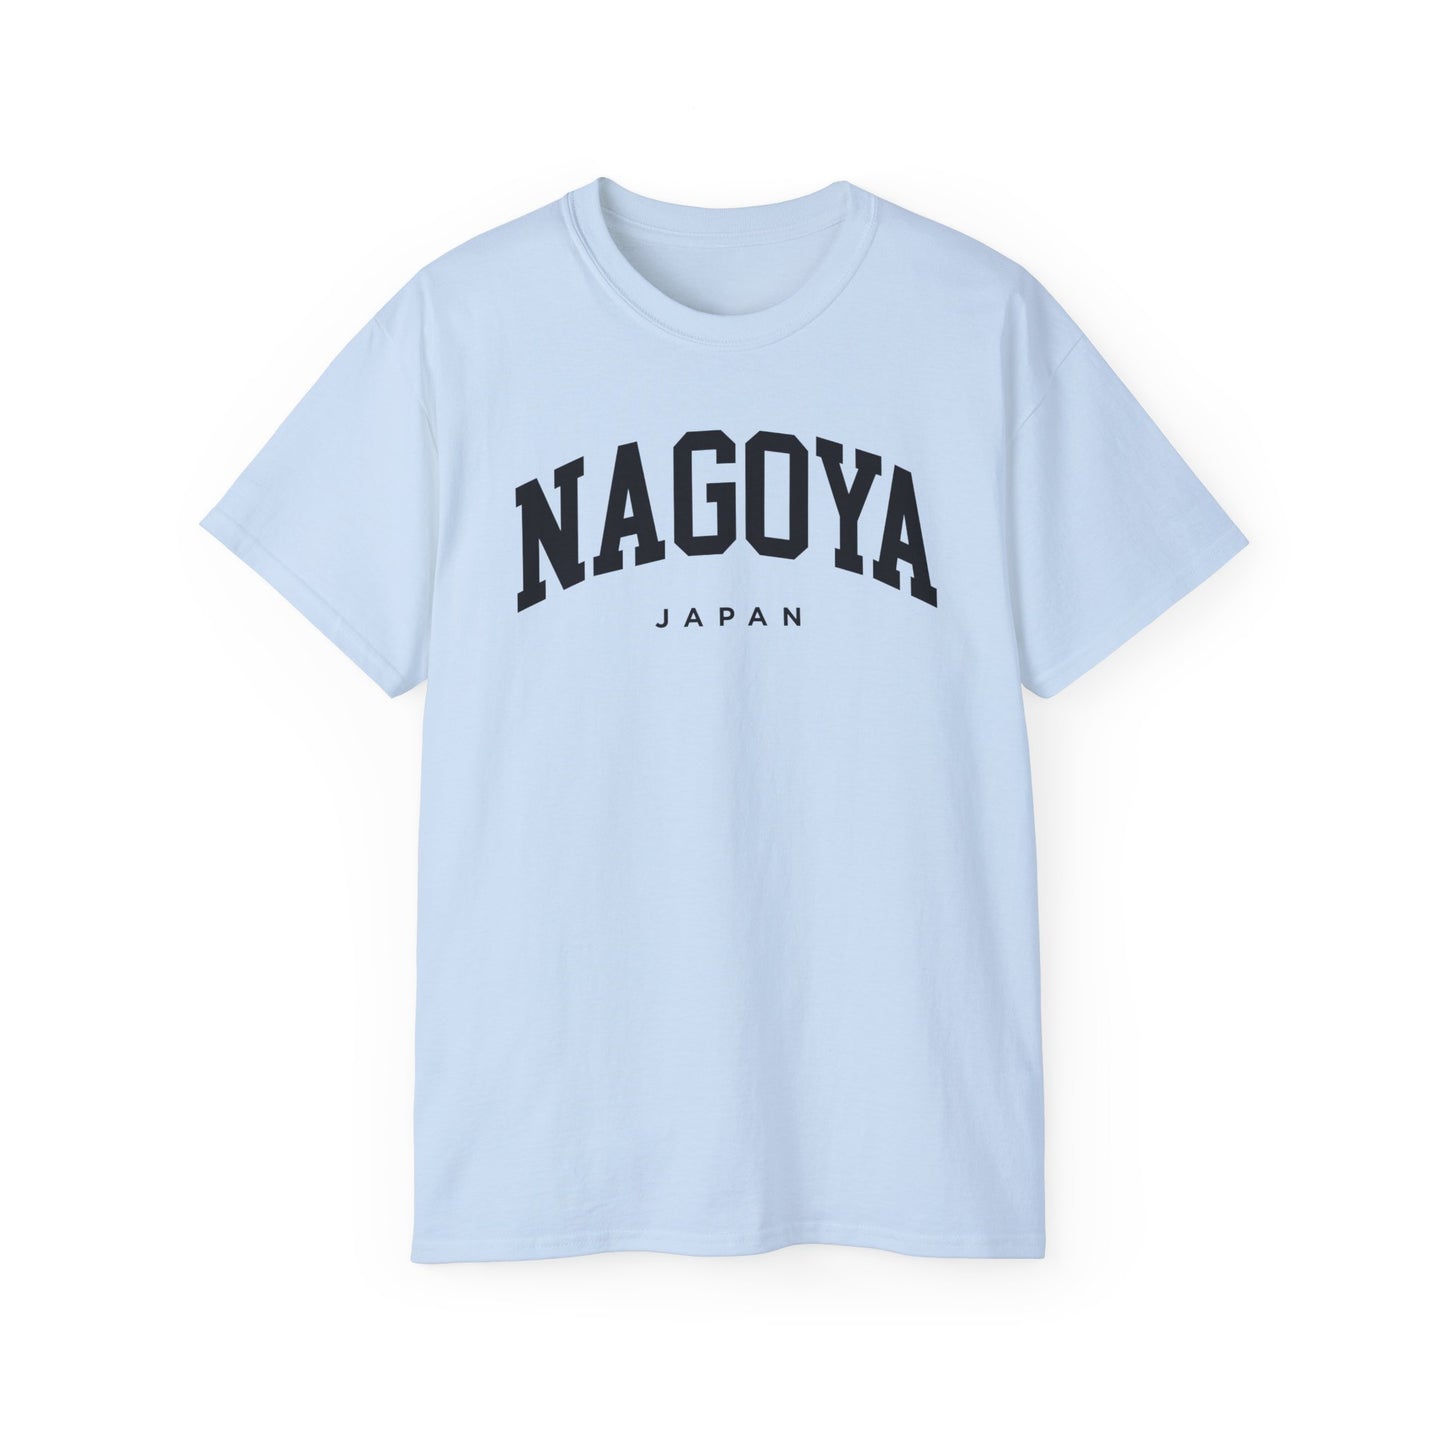 Nagoya Japan Tee